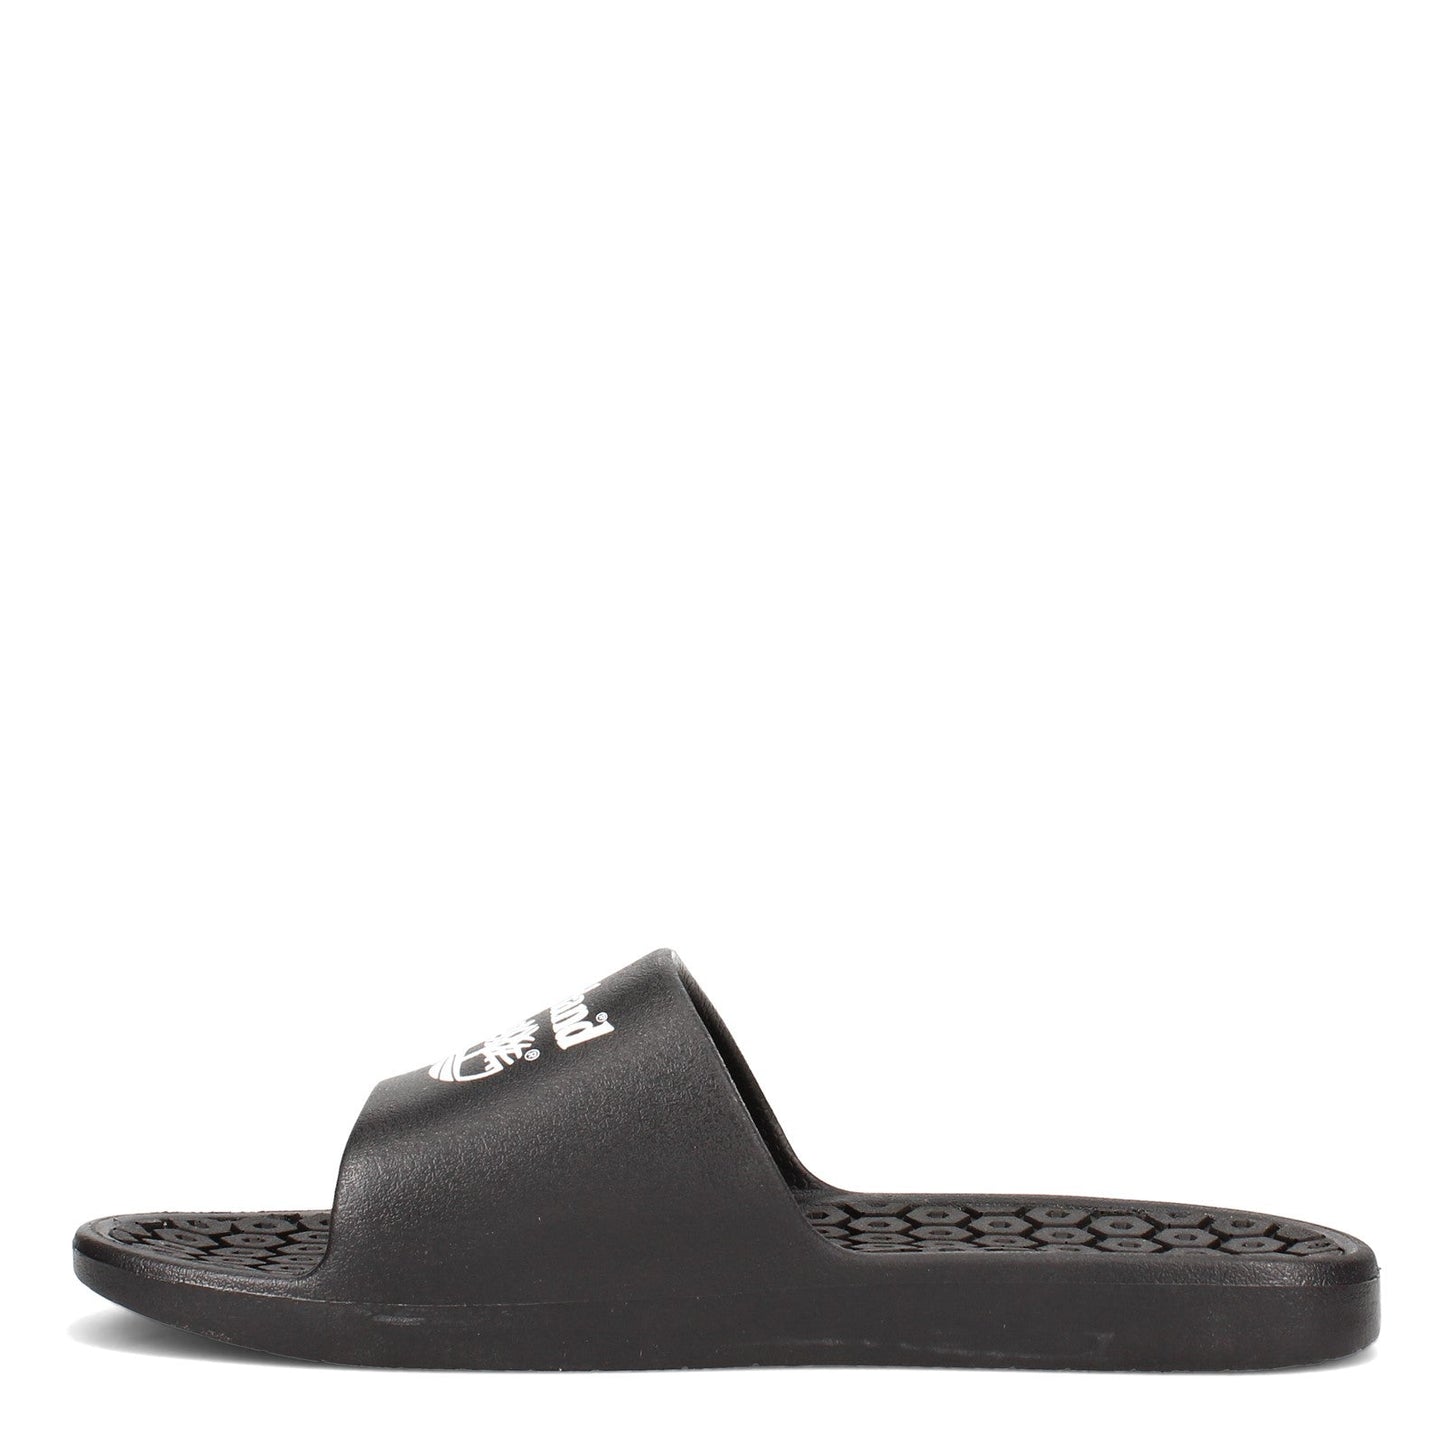 Timberland PRO Mens Size 6M Black White Slides Shower Shoes TB 0A2A7C 001 AFT